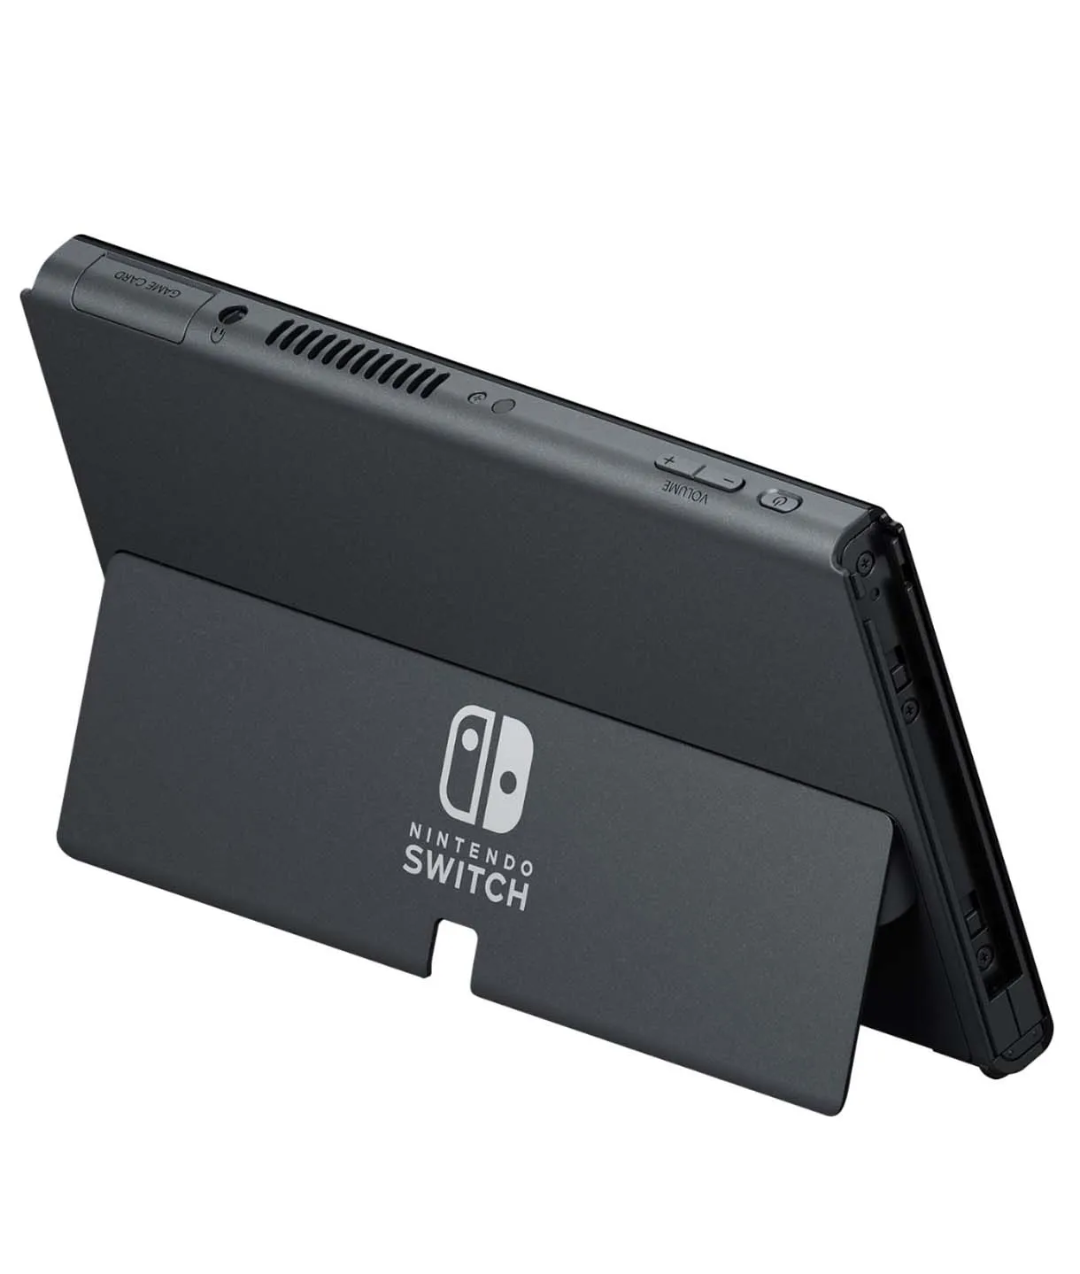 Nintendo Switch – OLED Model White Joycon (chủ sở hữu trước)